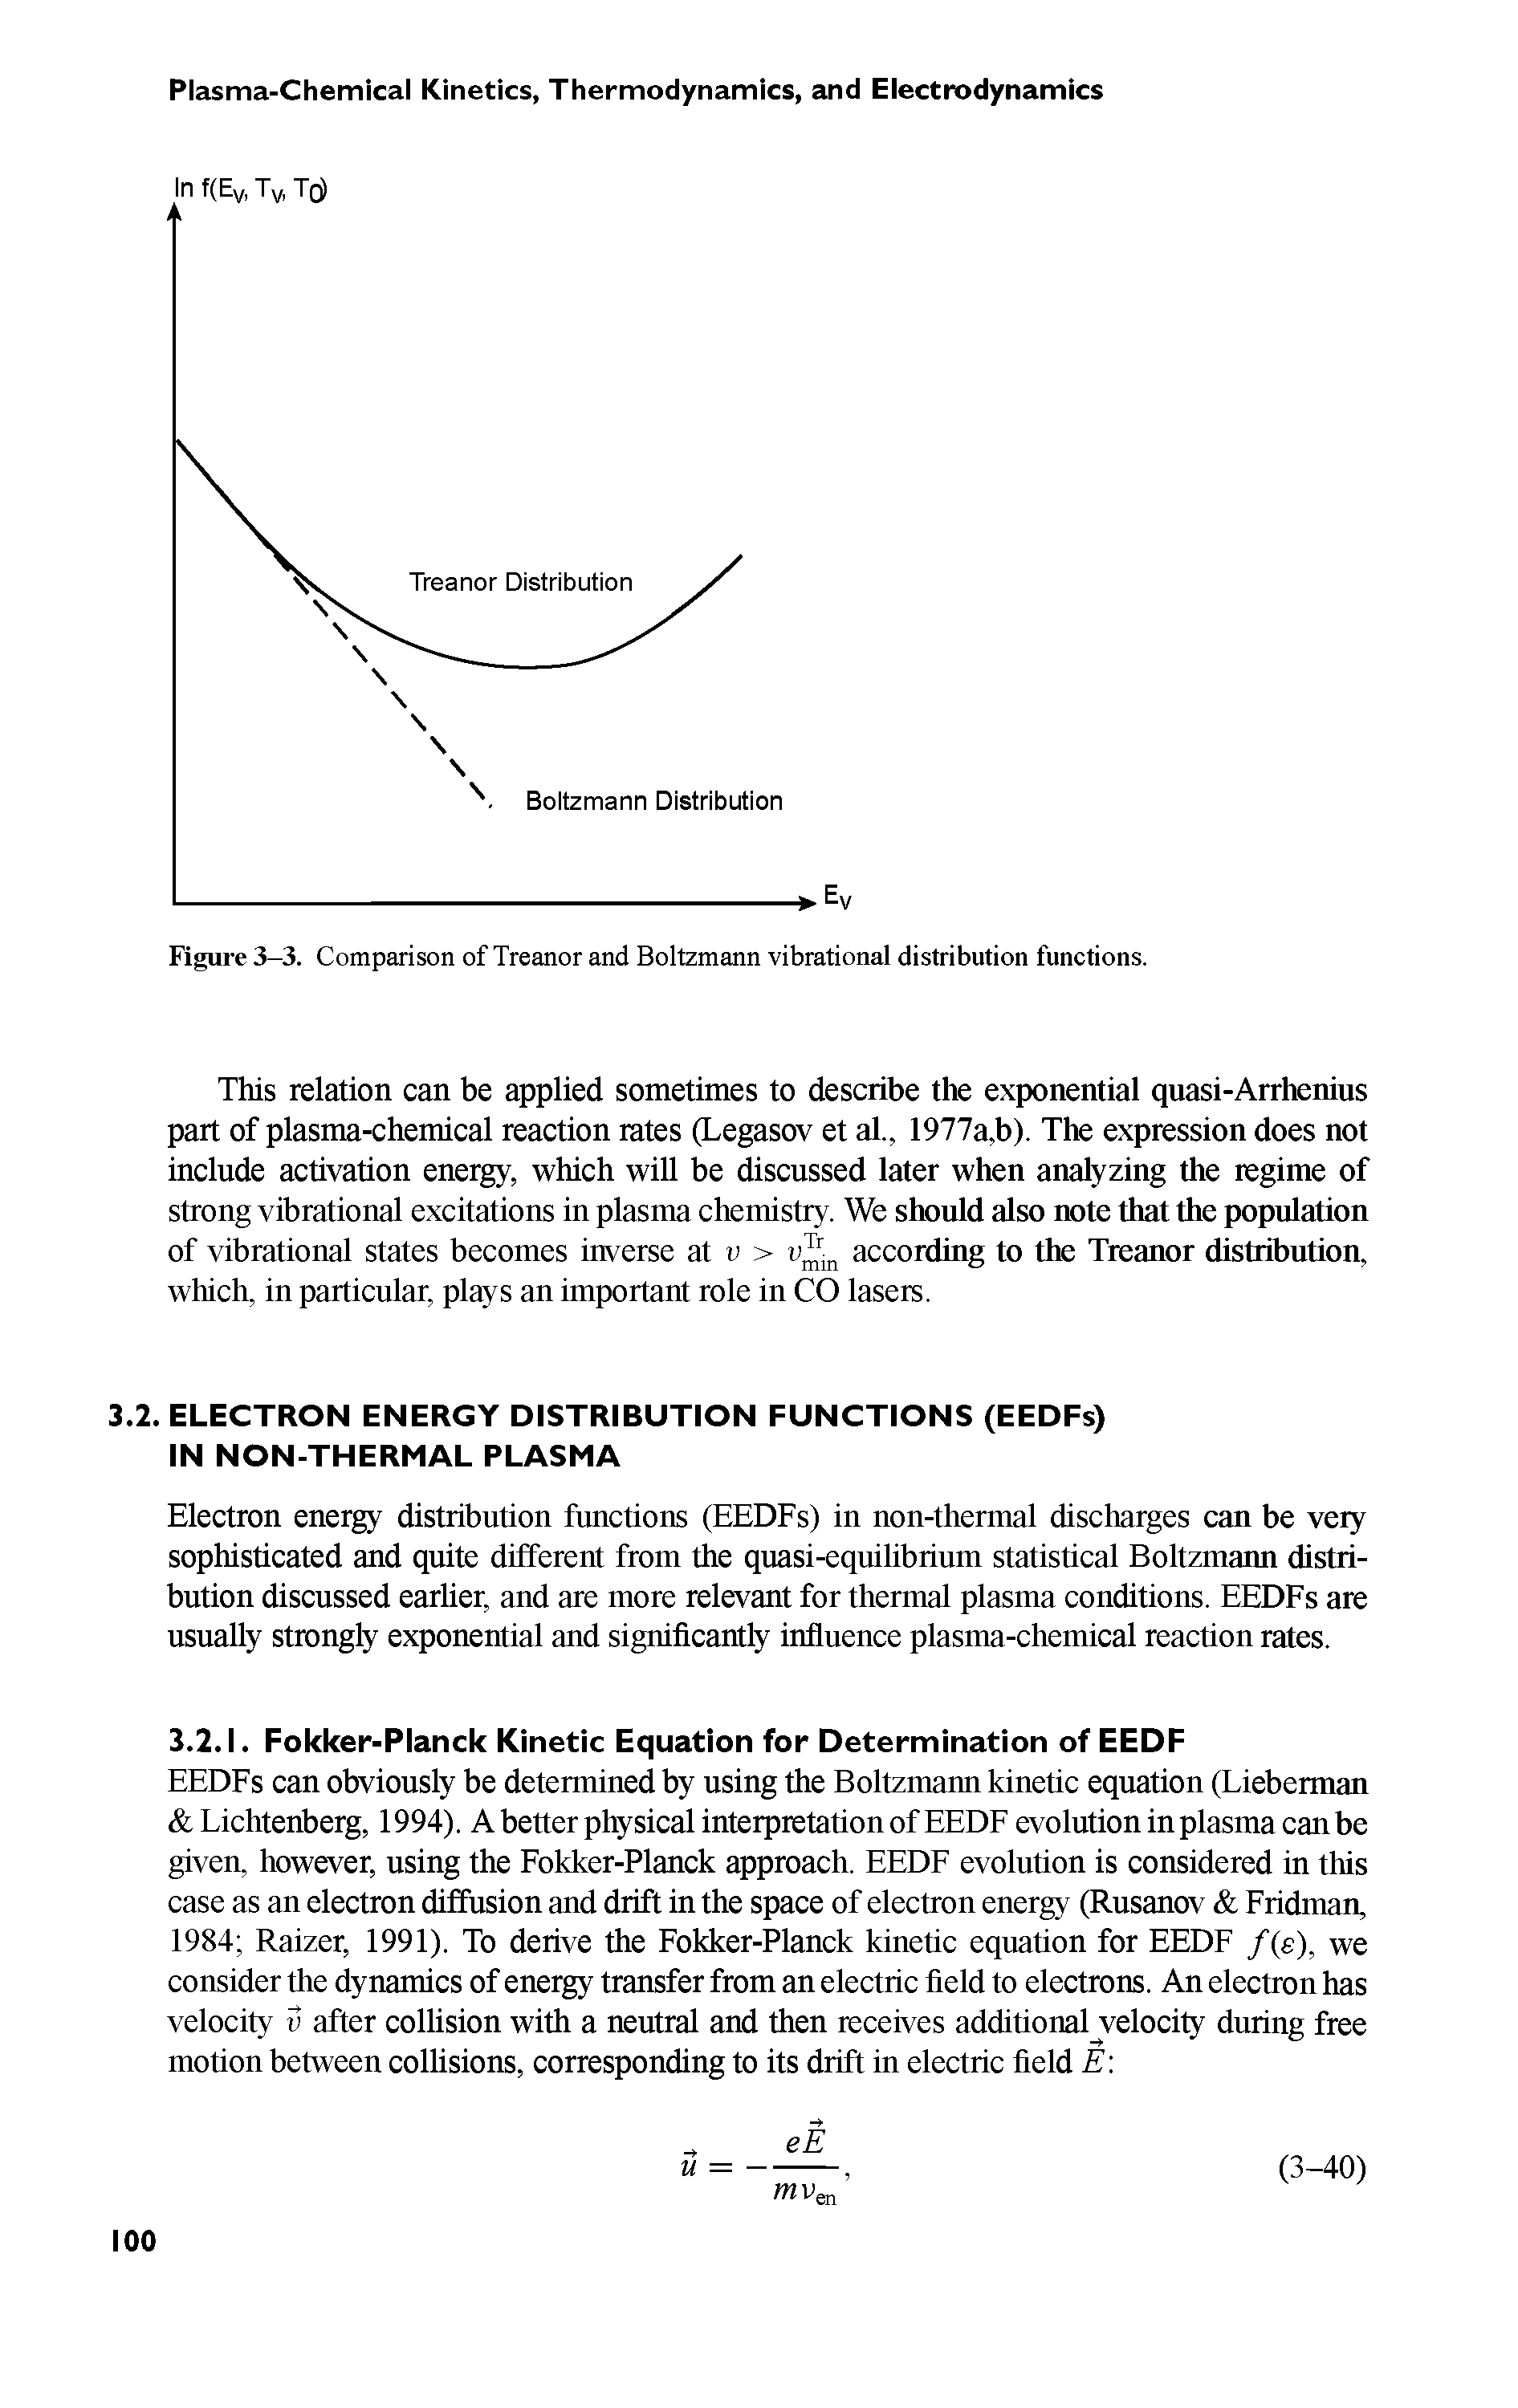 Figure 3-3. Comparison of Treanor and Boltzmann vibrational distribution functions.